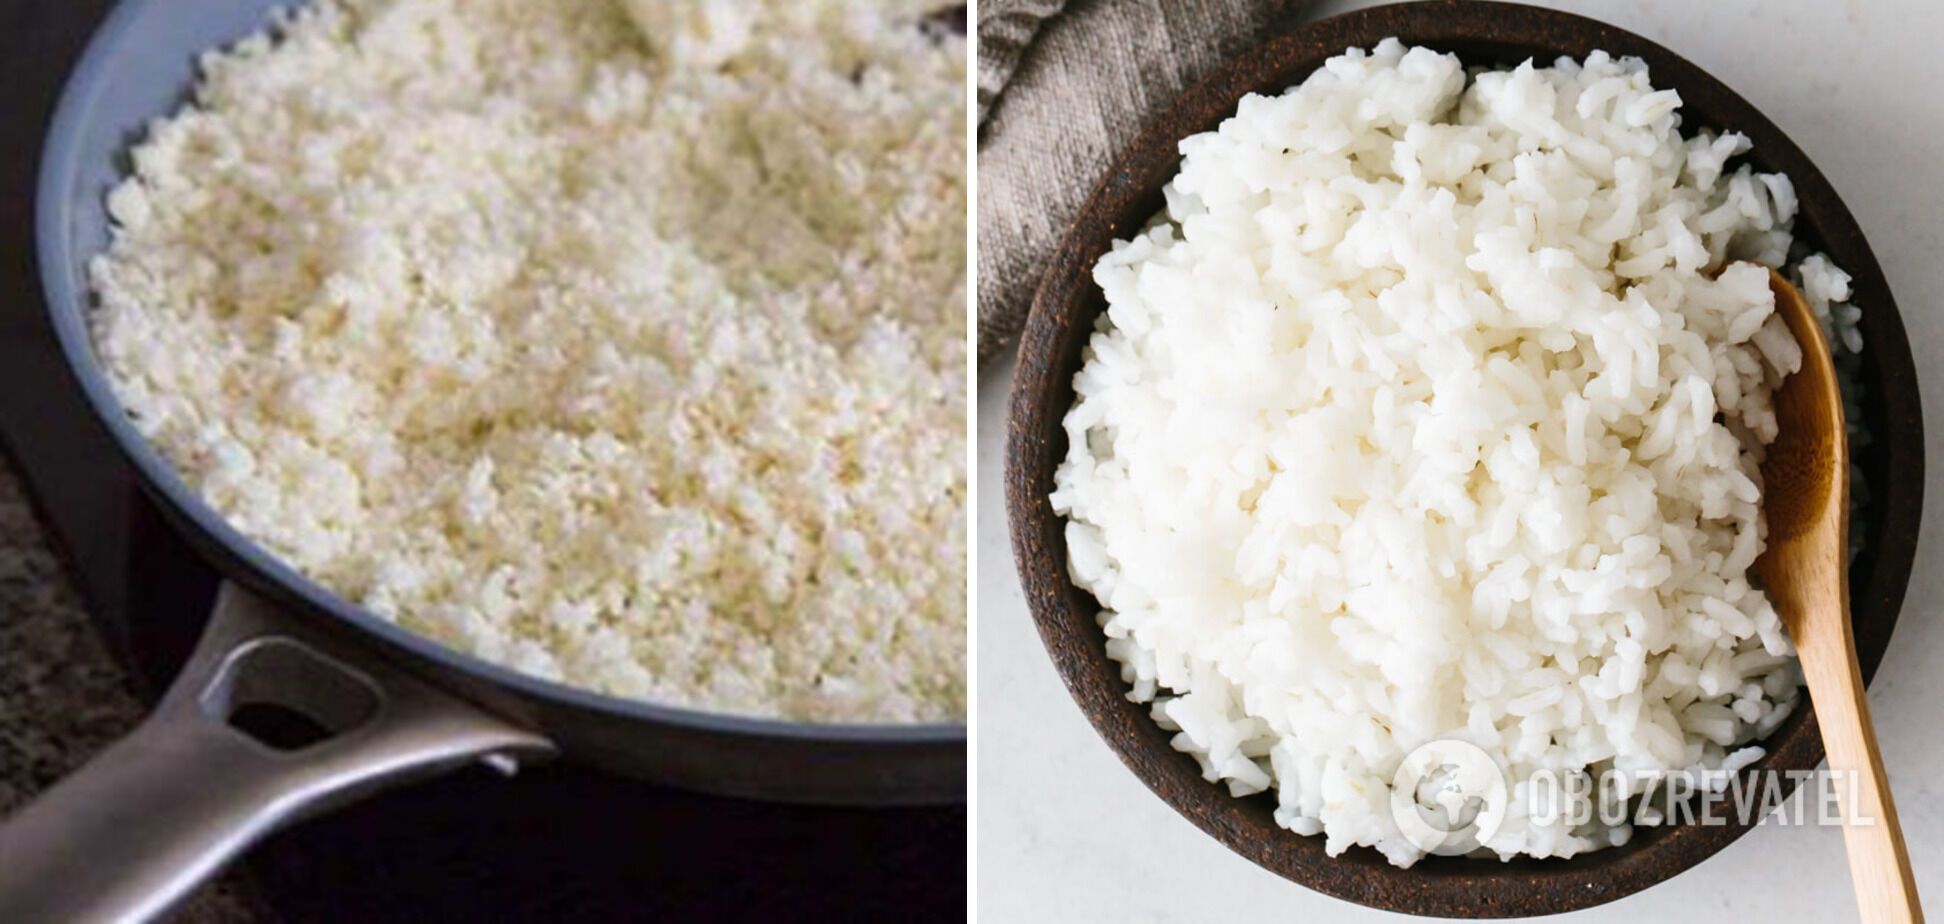 Ready-made puffed rice